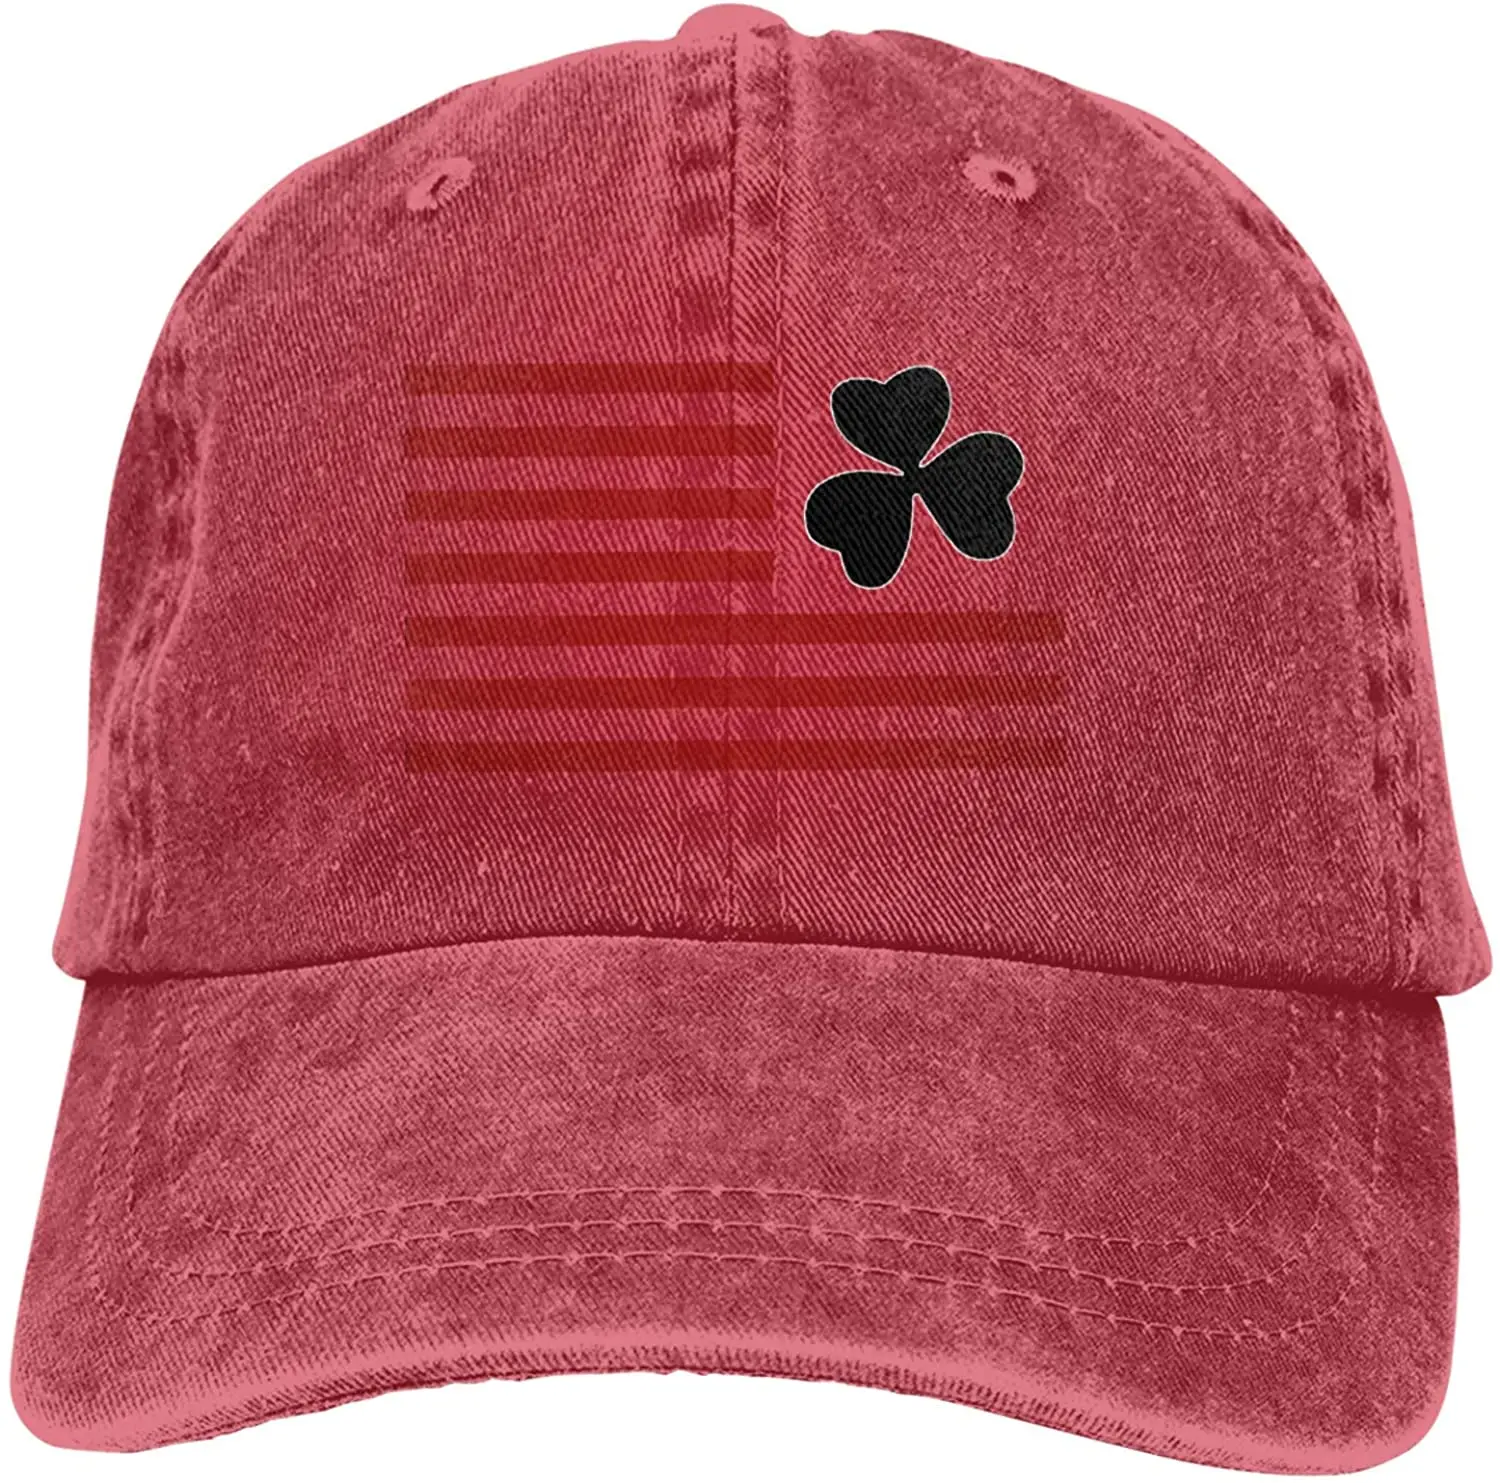 

Black American Flag Clover Sports Denim Cap Adjustable Unisex Plain Baseball Cowboy Snapback Hat